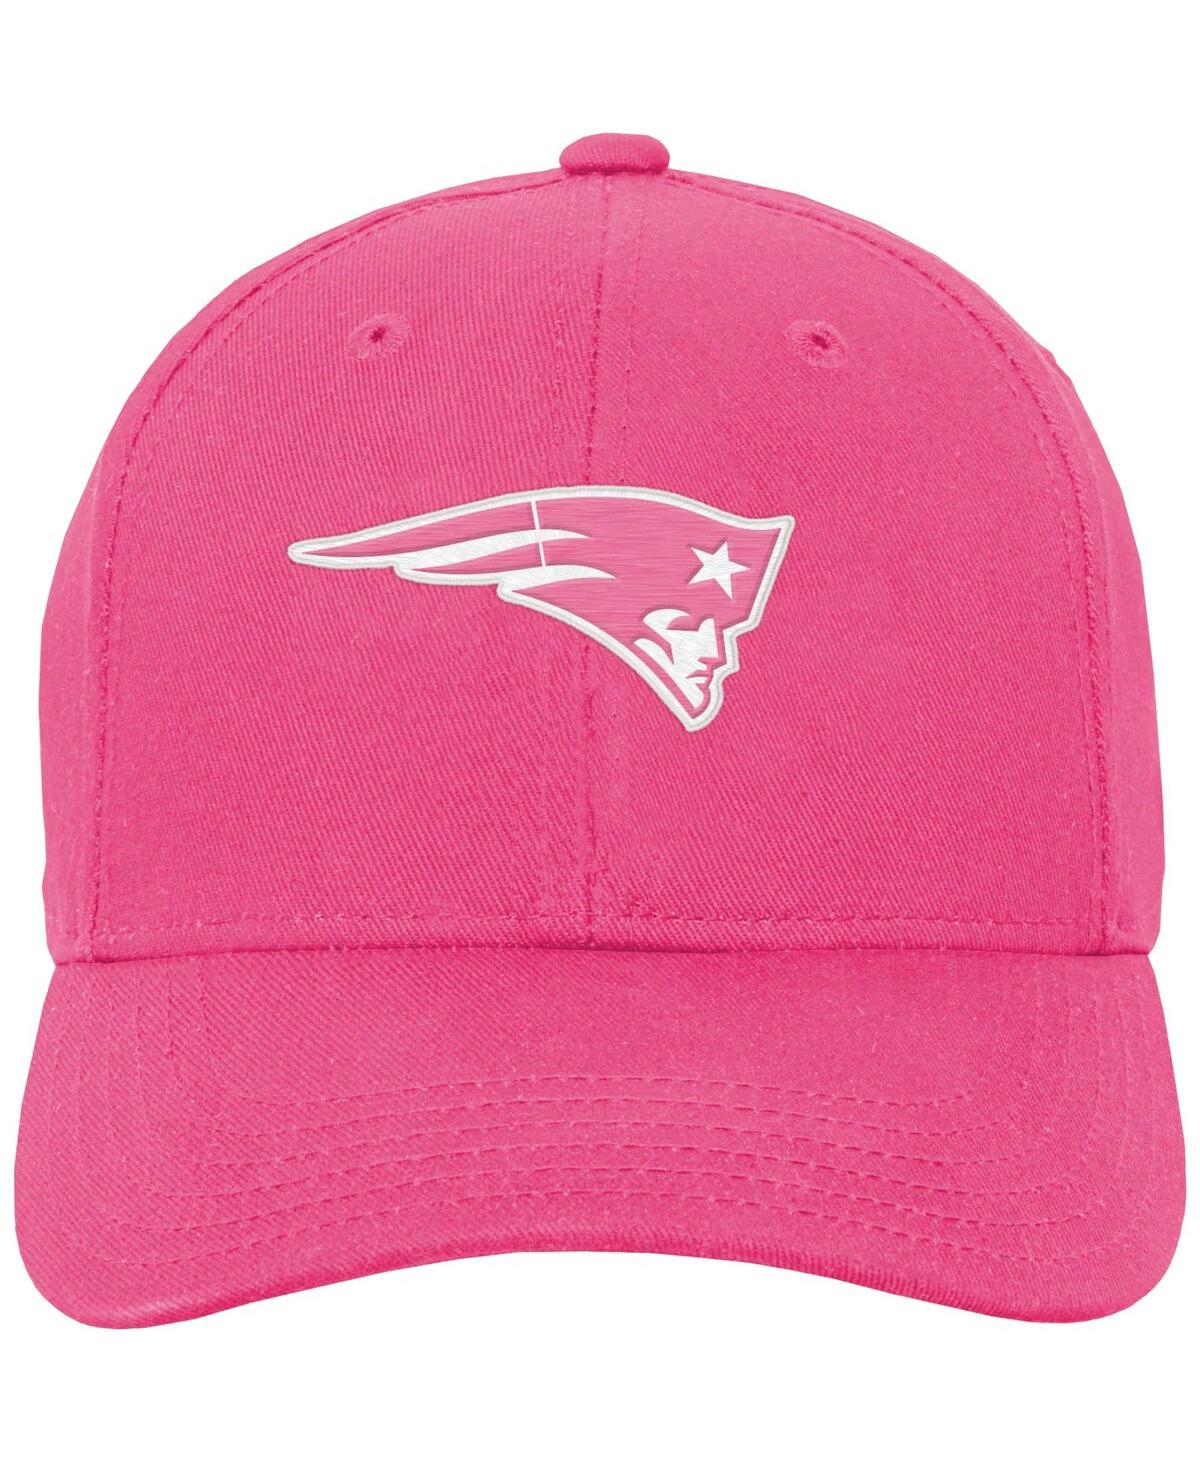 Shop Outerstuff Big Girls Pink New England Patriots Adjustable Hat